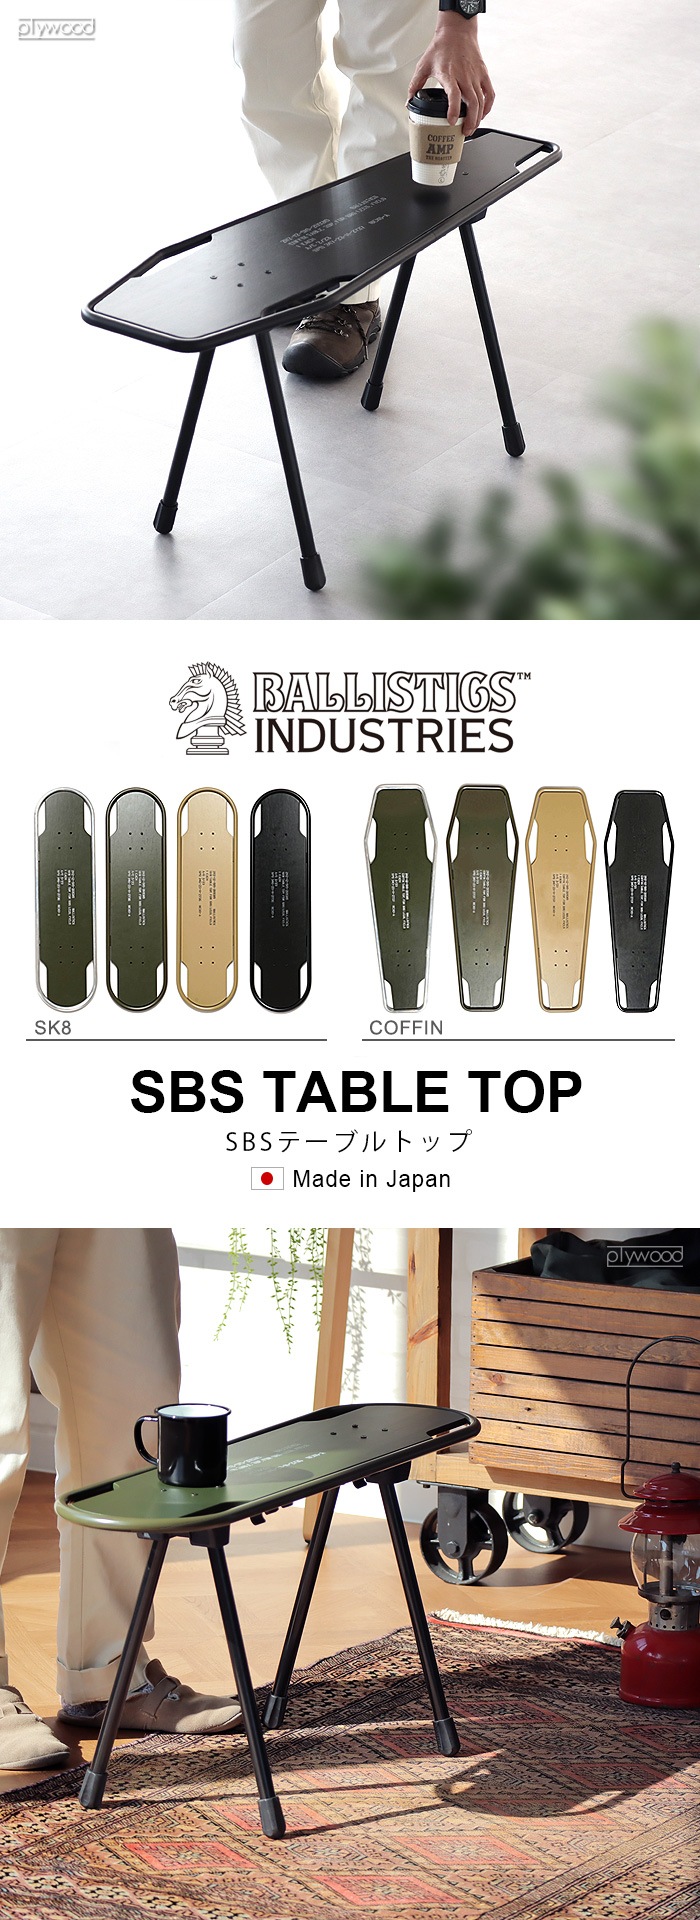 BALLISTICS SBS TABLE TOP COFFIN シルバー×OD BAA-2310 [脚別売り 